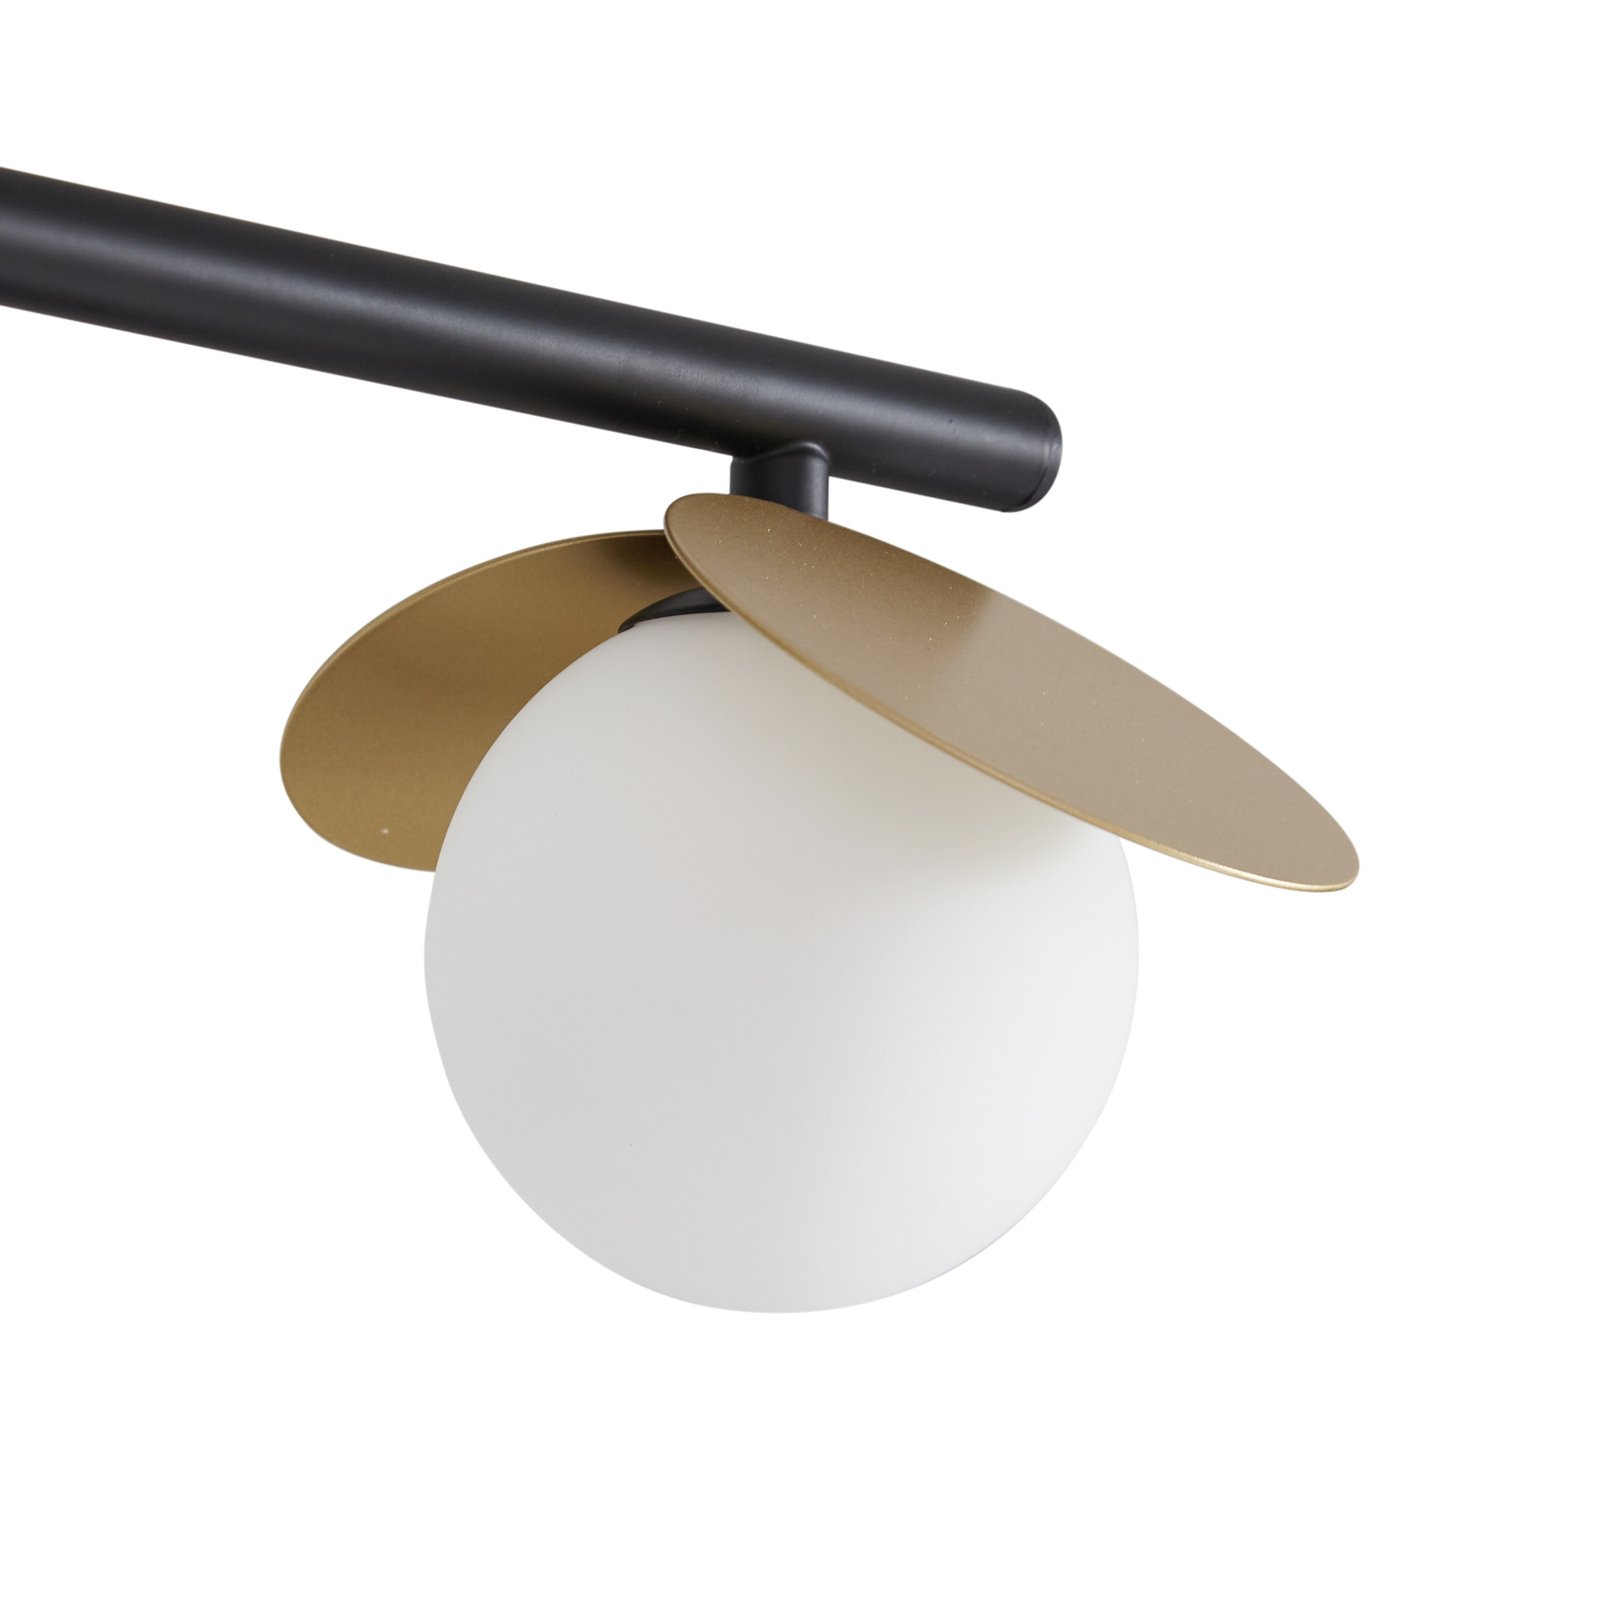 Lucande Pallo LED-Deckenlampe, linear, 4-flg., schwarz/gold